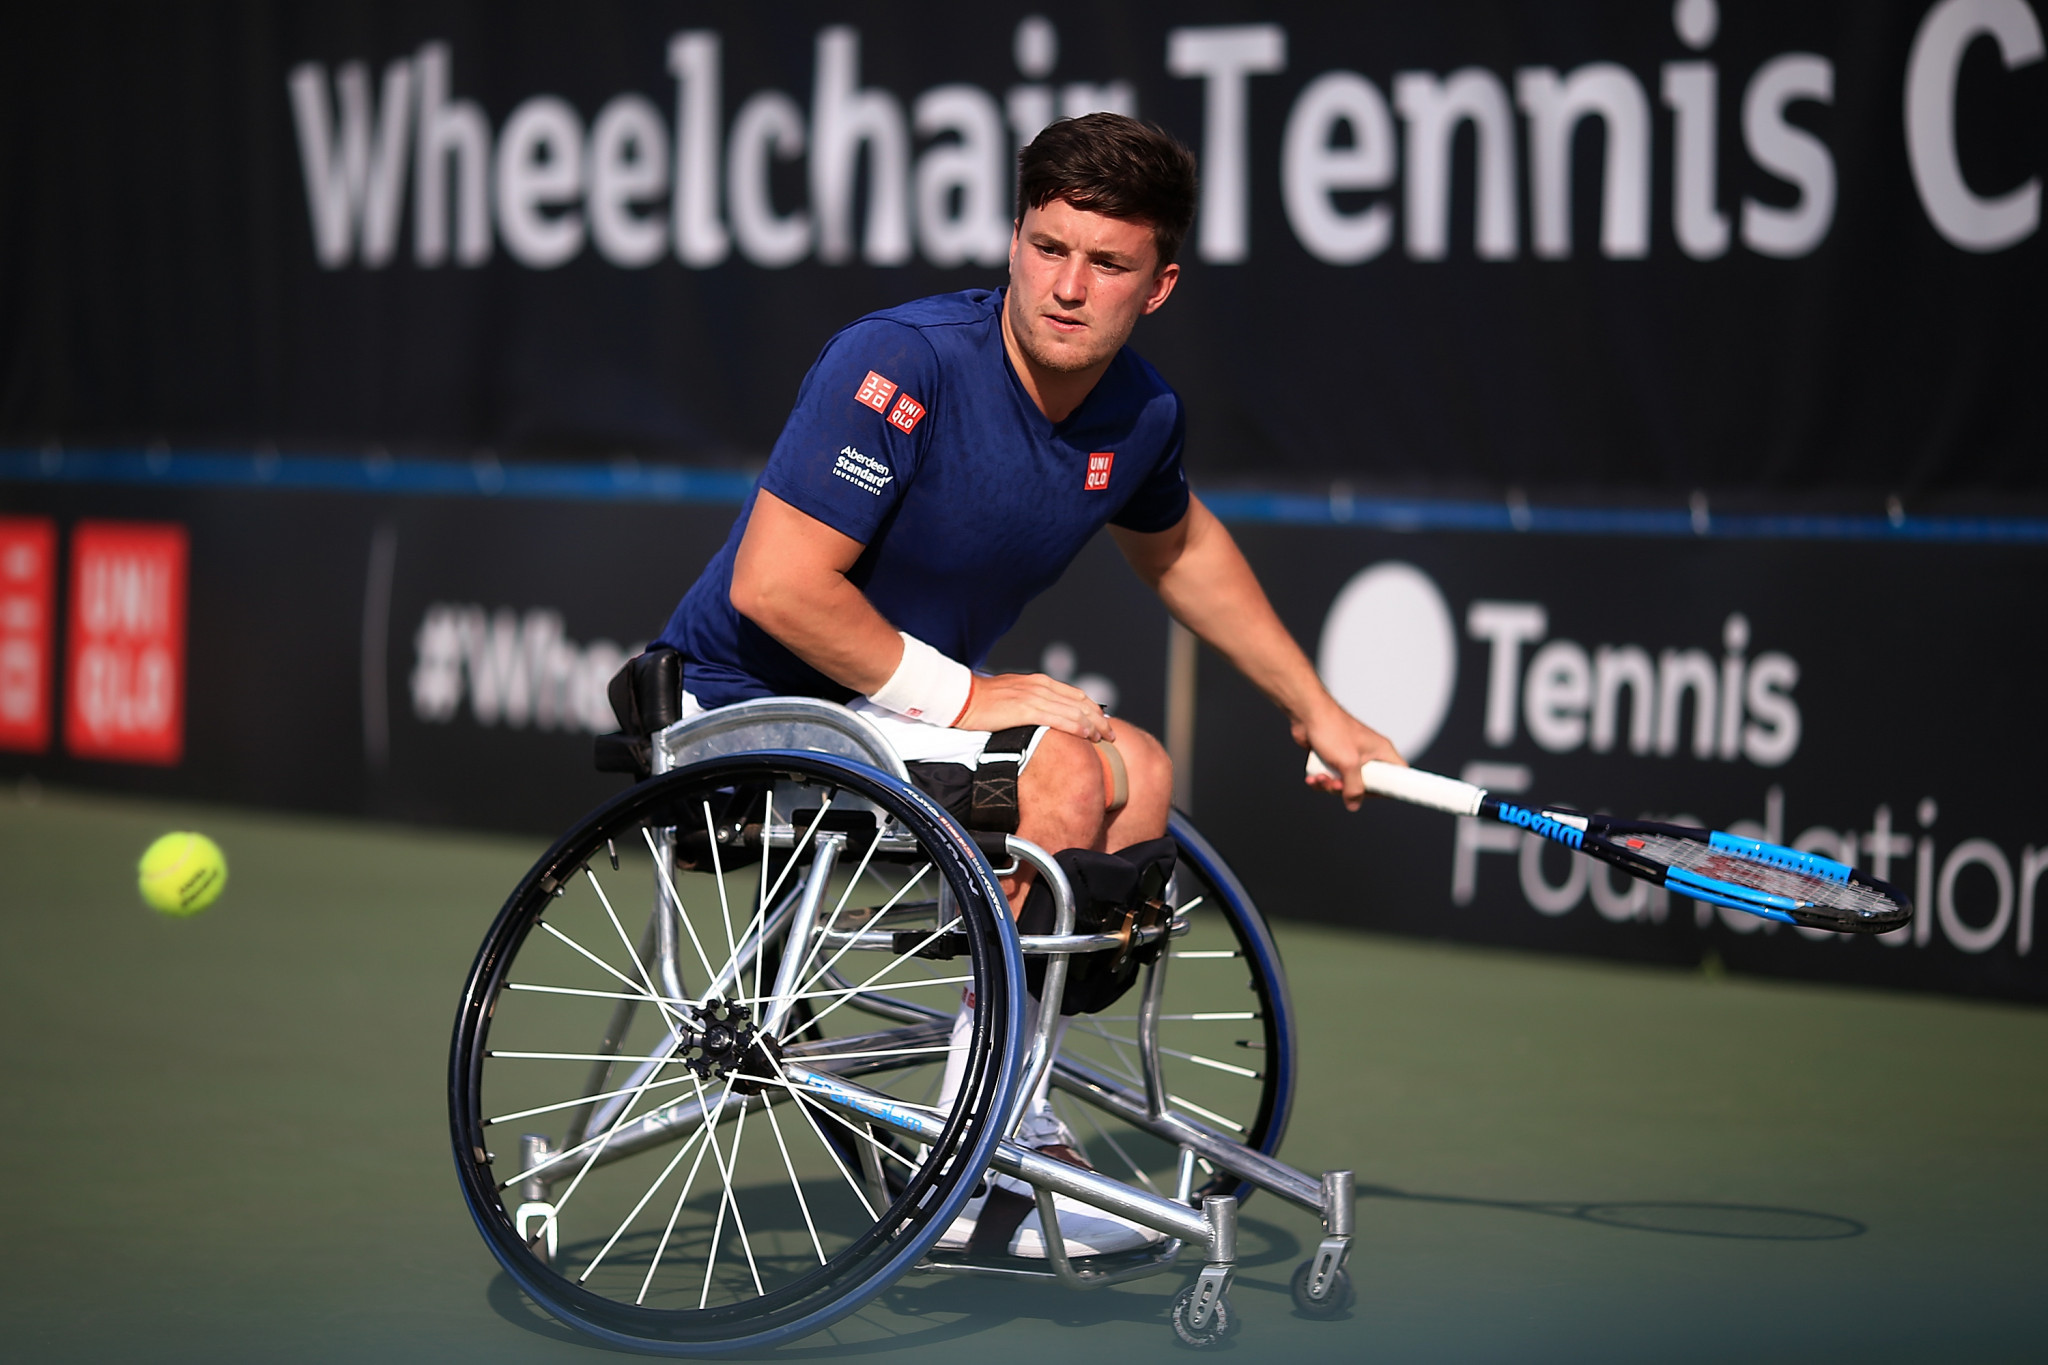 Reid defeats Gérard to earn semi-final spot at Bendigo Wheelchair Tennis Open